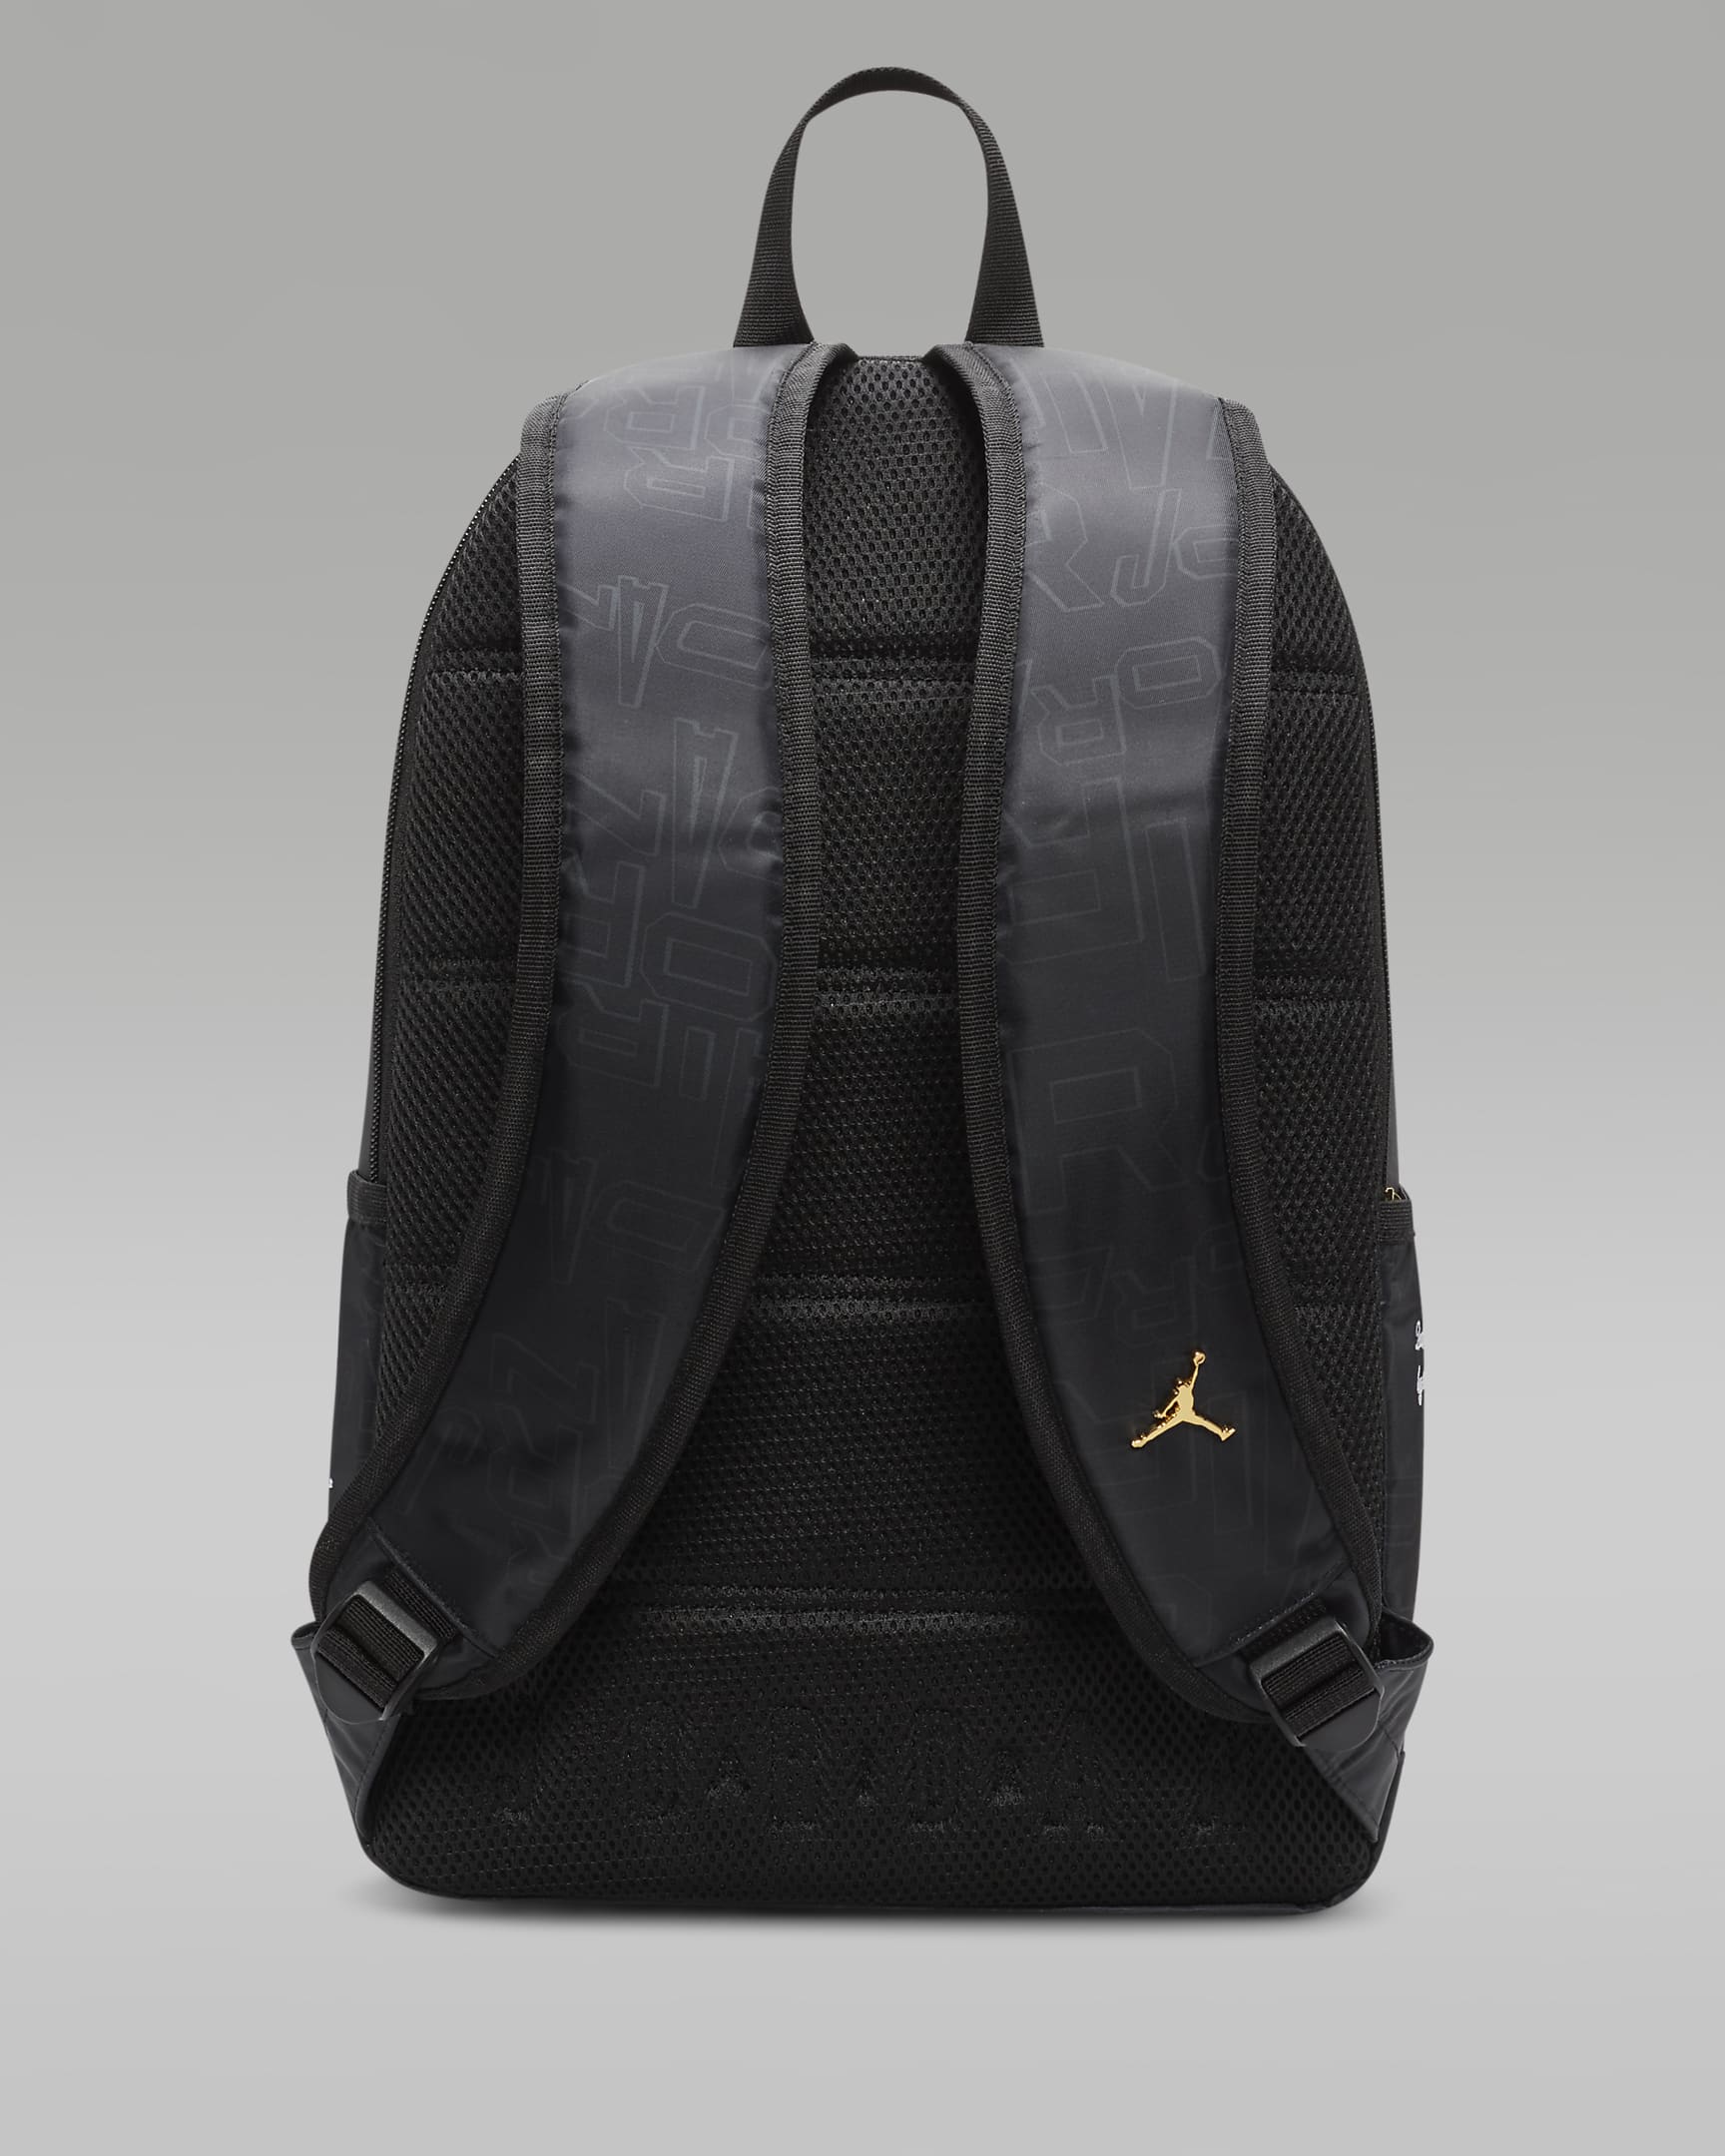 Jordan Black and Gold Backpack Backpack (19L). Nike NL